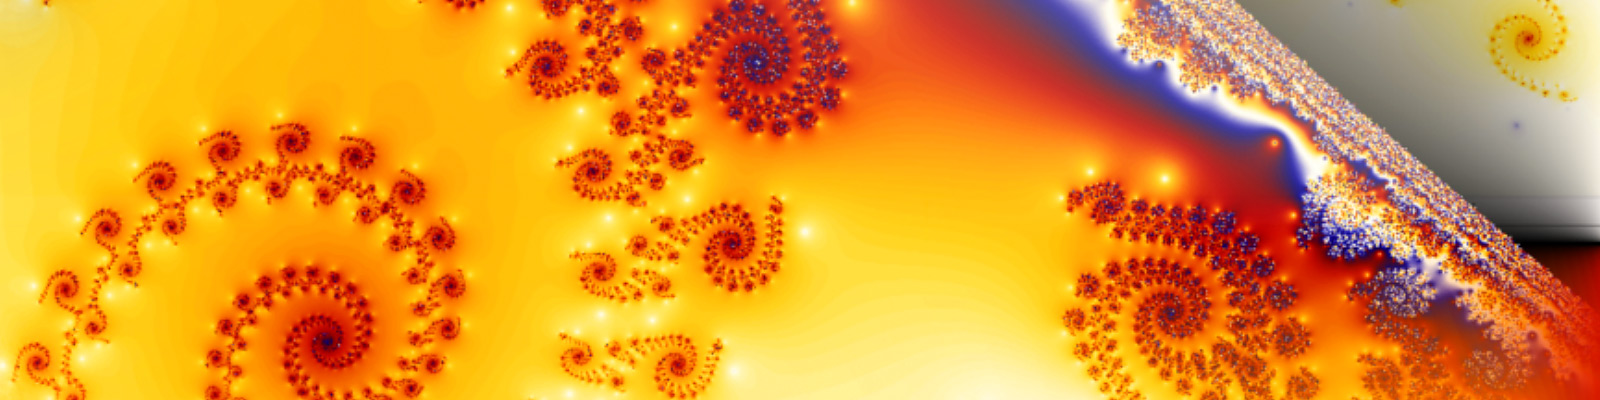 An image of fractal patterns